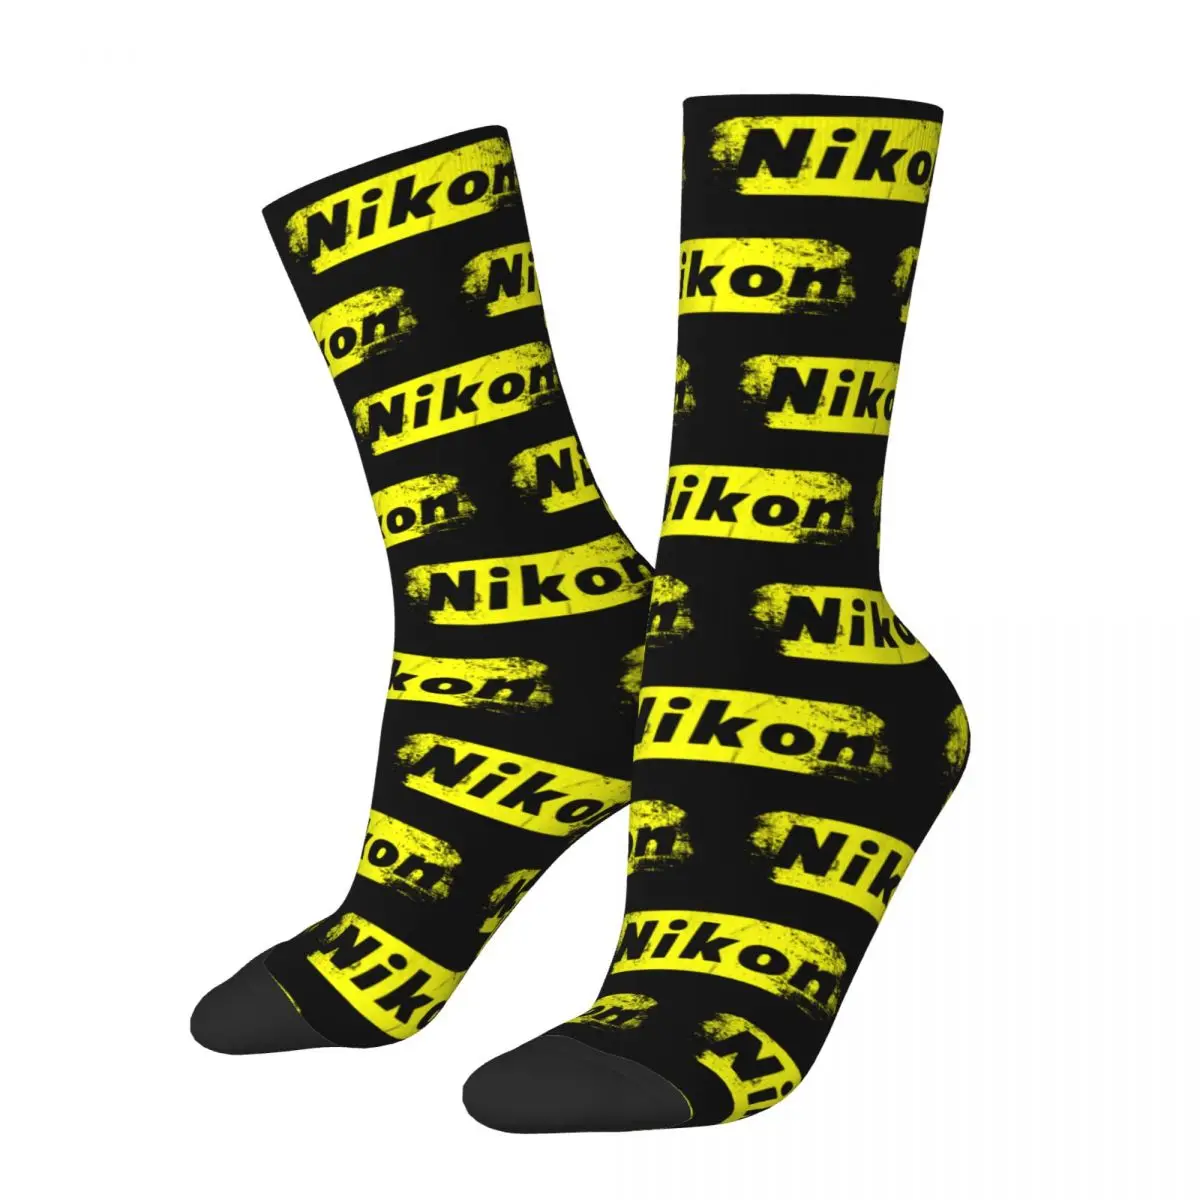 Nikon Retro 1960s Logo Accessories Crew Socks Cozy Skateboard Long Socks Cute for Men's Birthday Gifts Idea